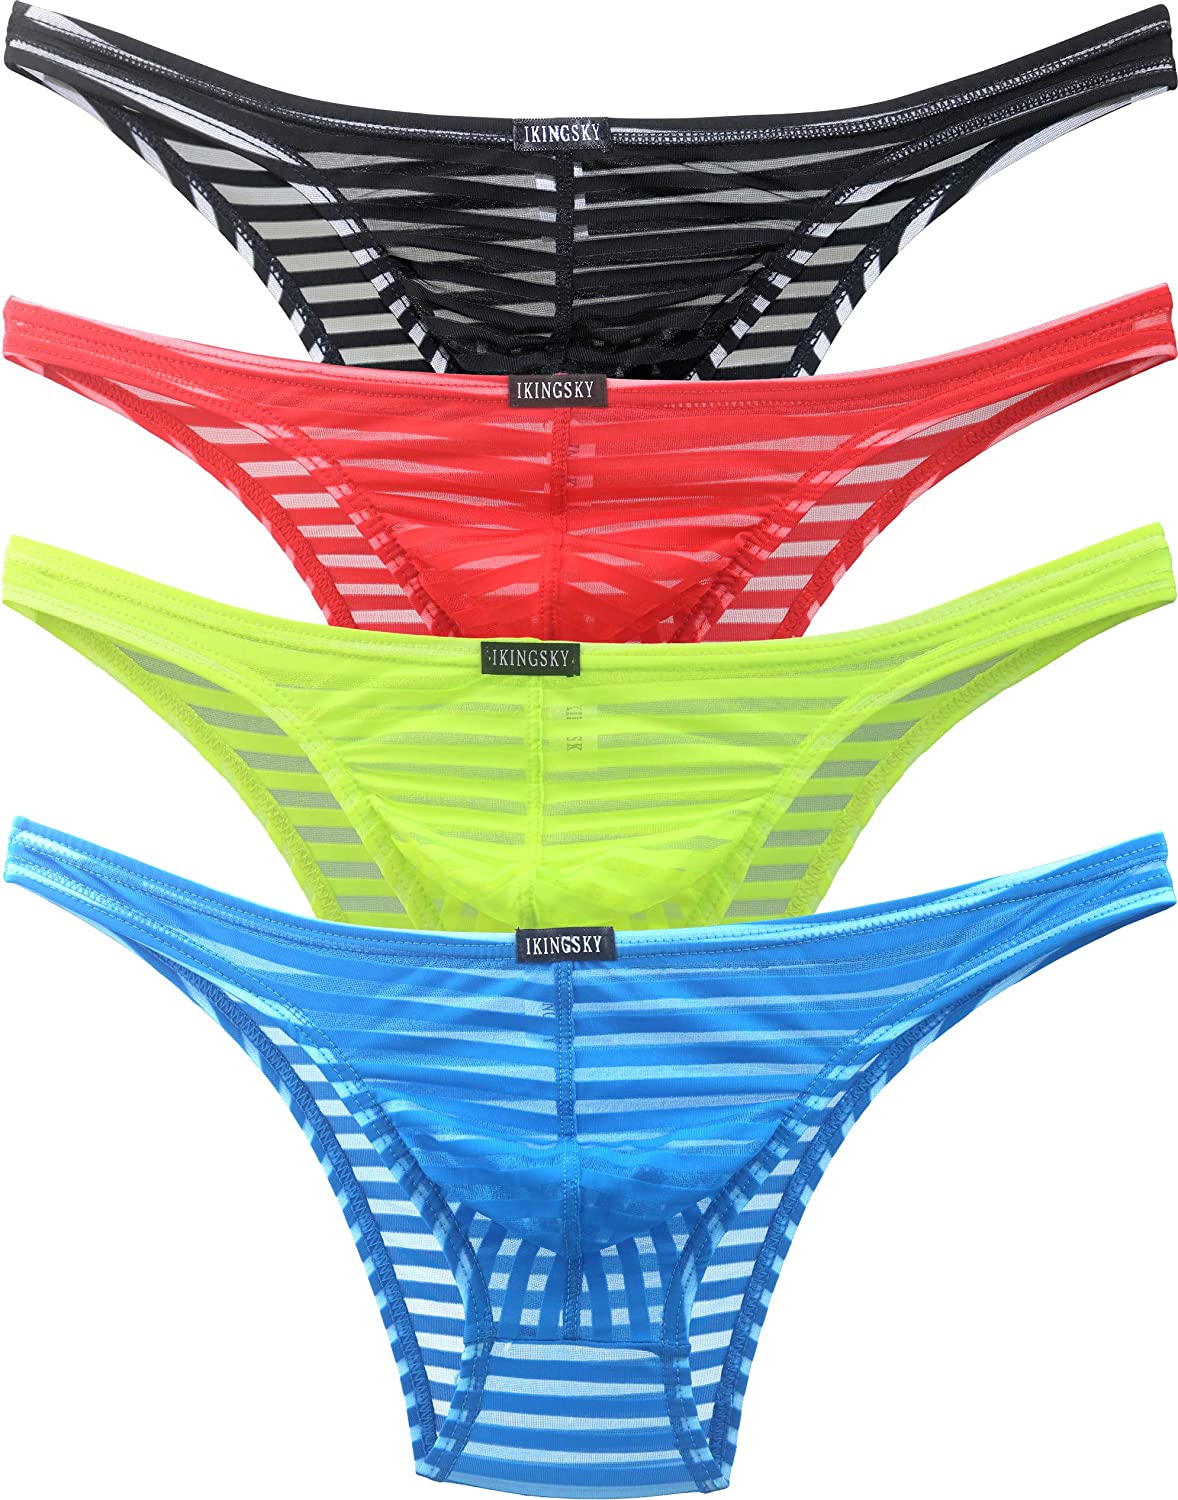 Ikingsky Men S Sexy Brazilian Underwear See Through Bikini 4 Pack Size Large E Ebay